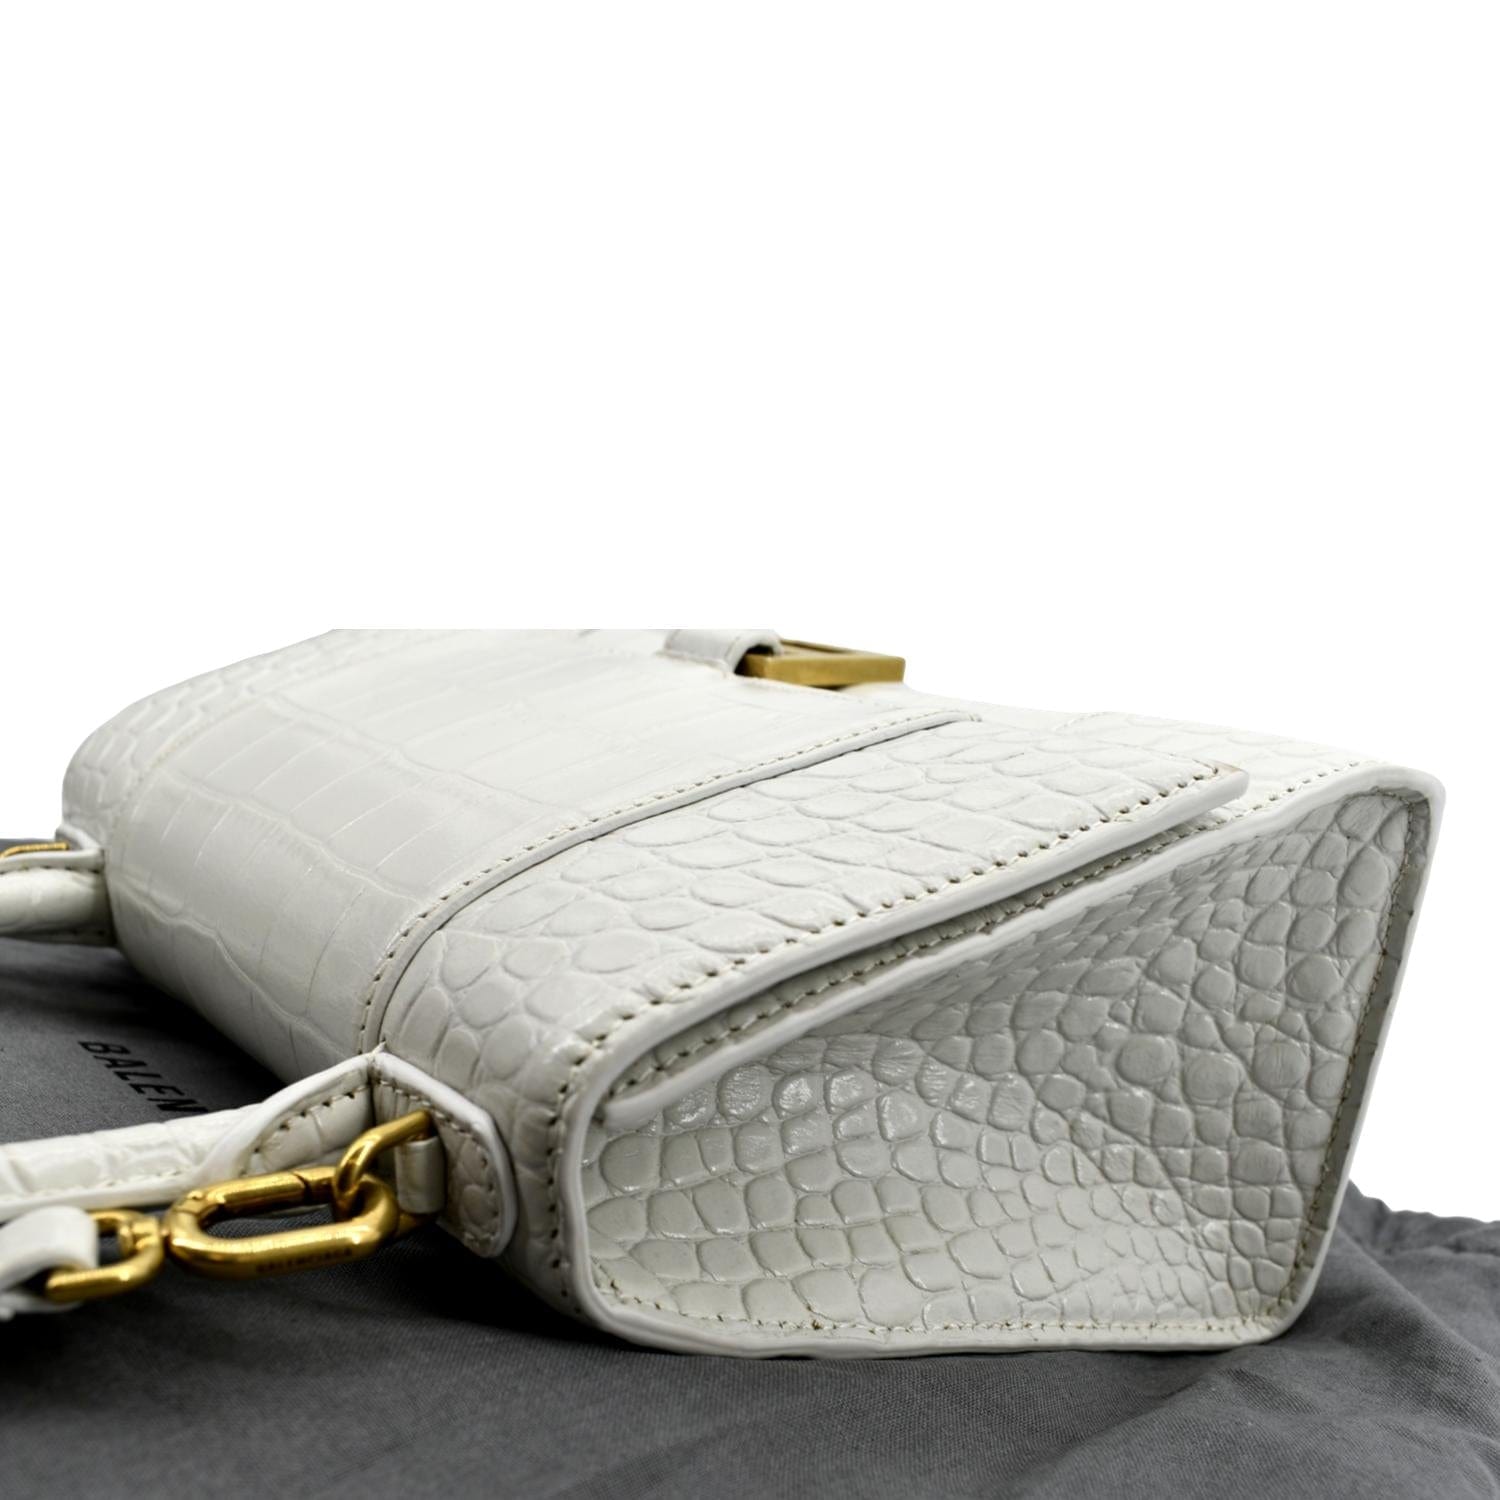 BALENCIAGA Croc Embossed Leather Shoulder Bag for Women